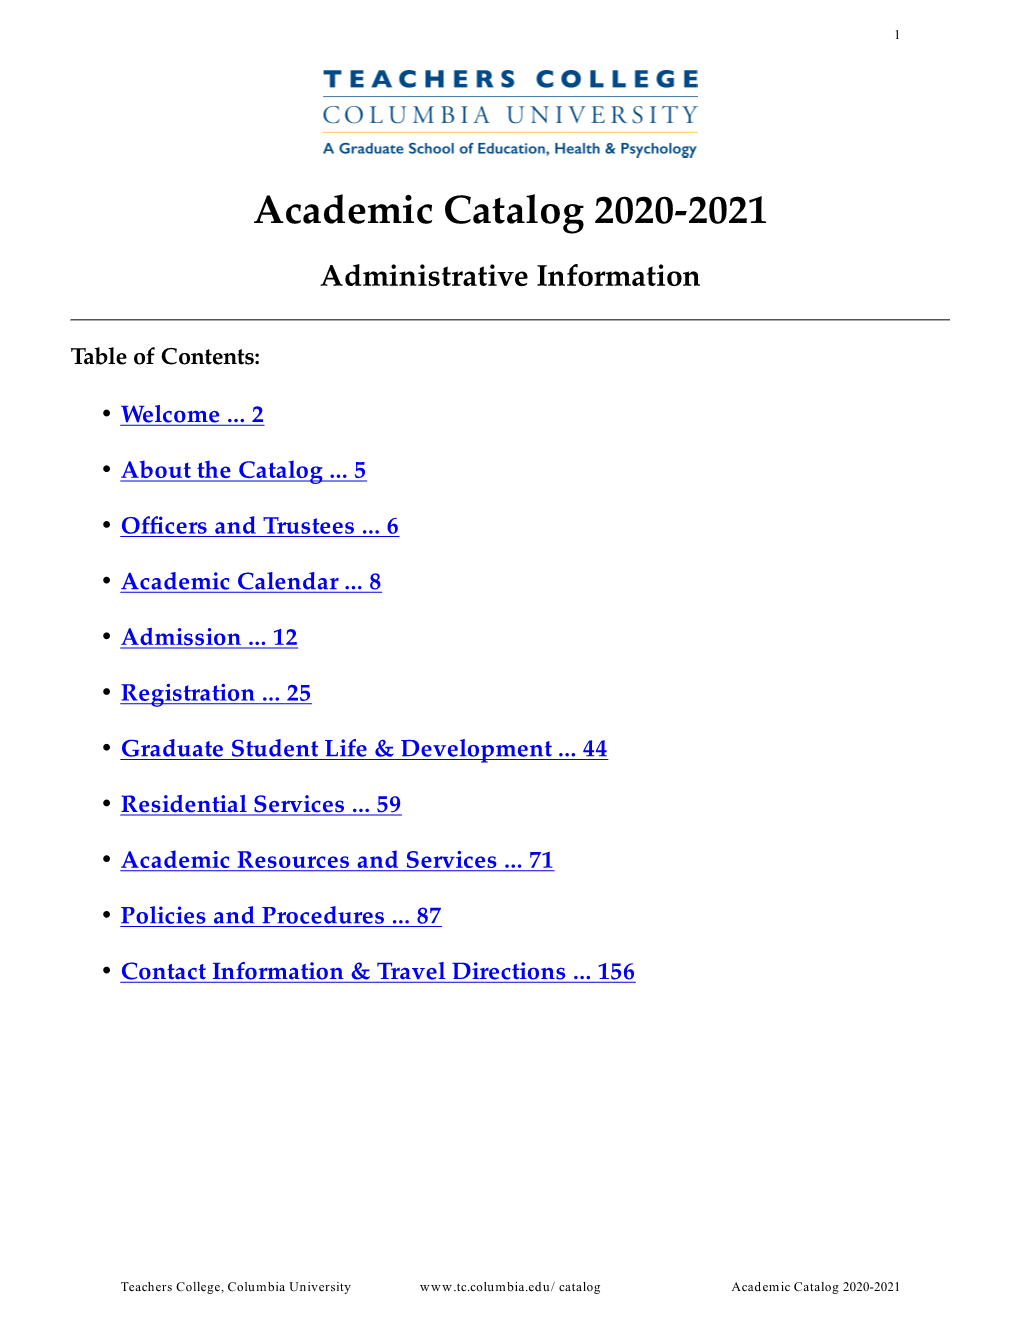 Academic Catalog 2020-2021 Administrative Information